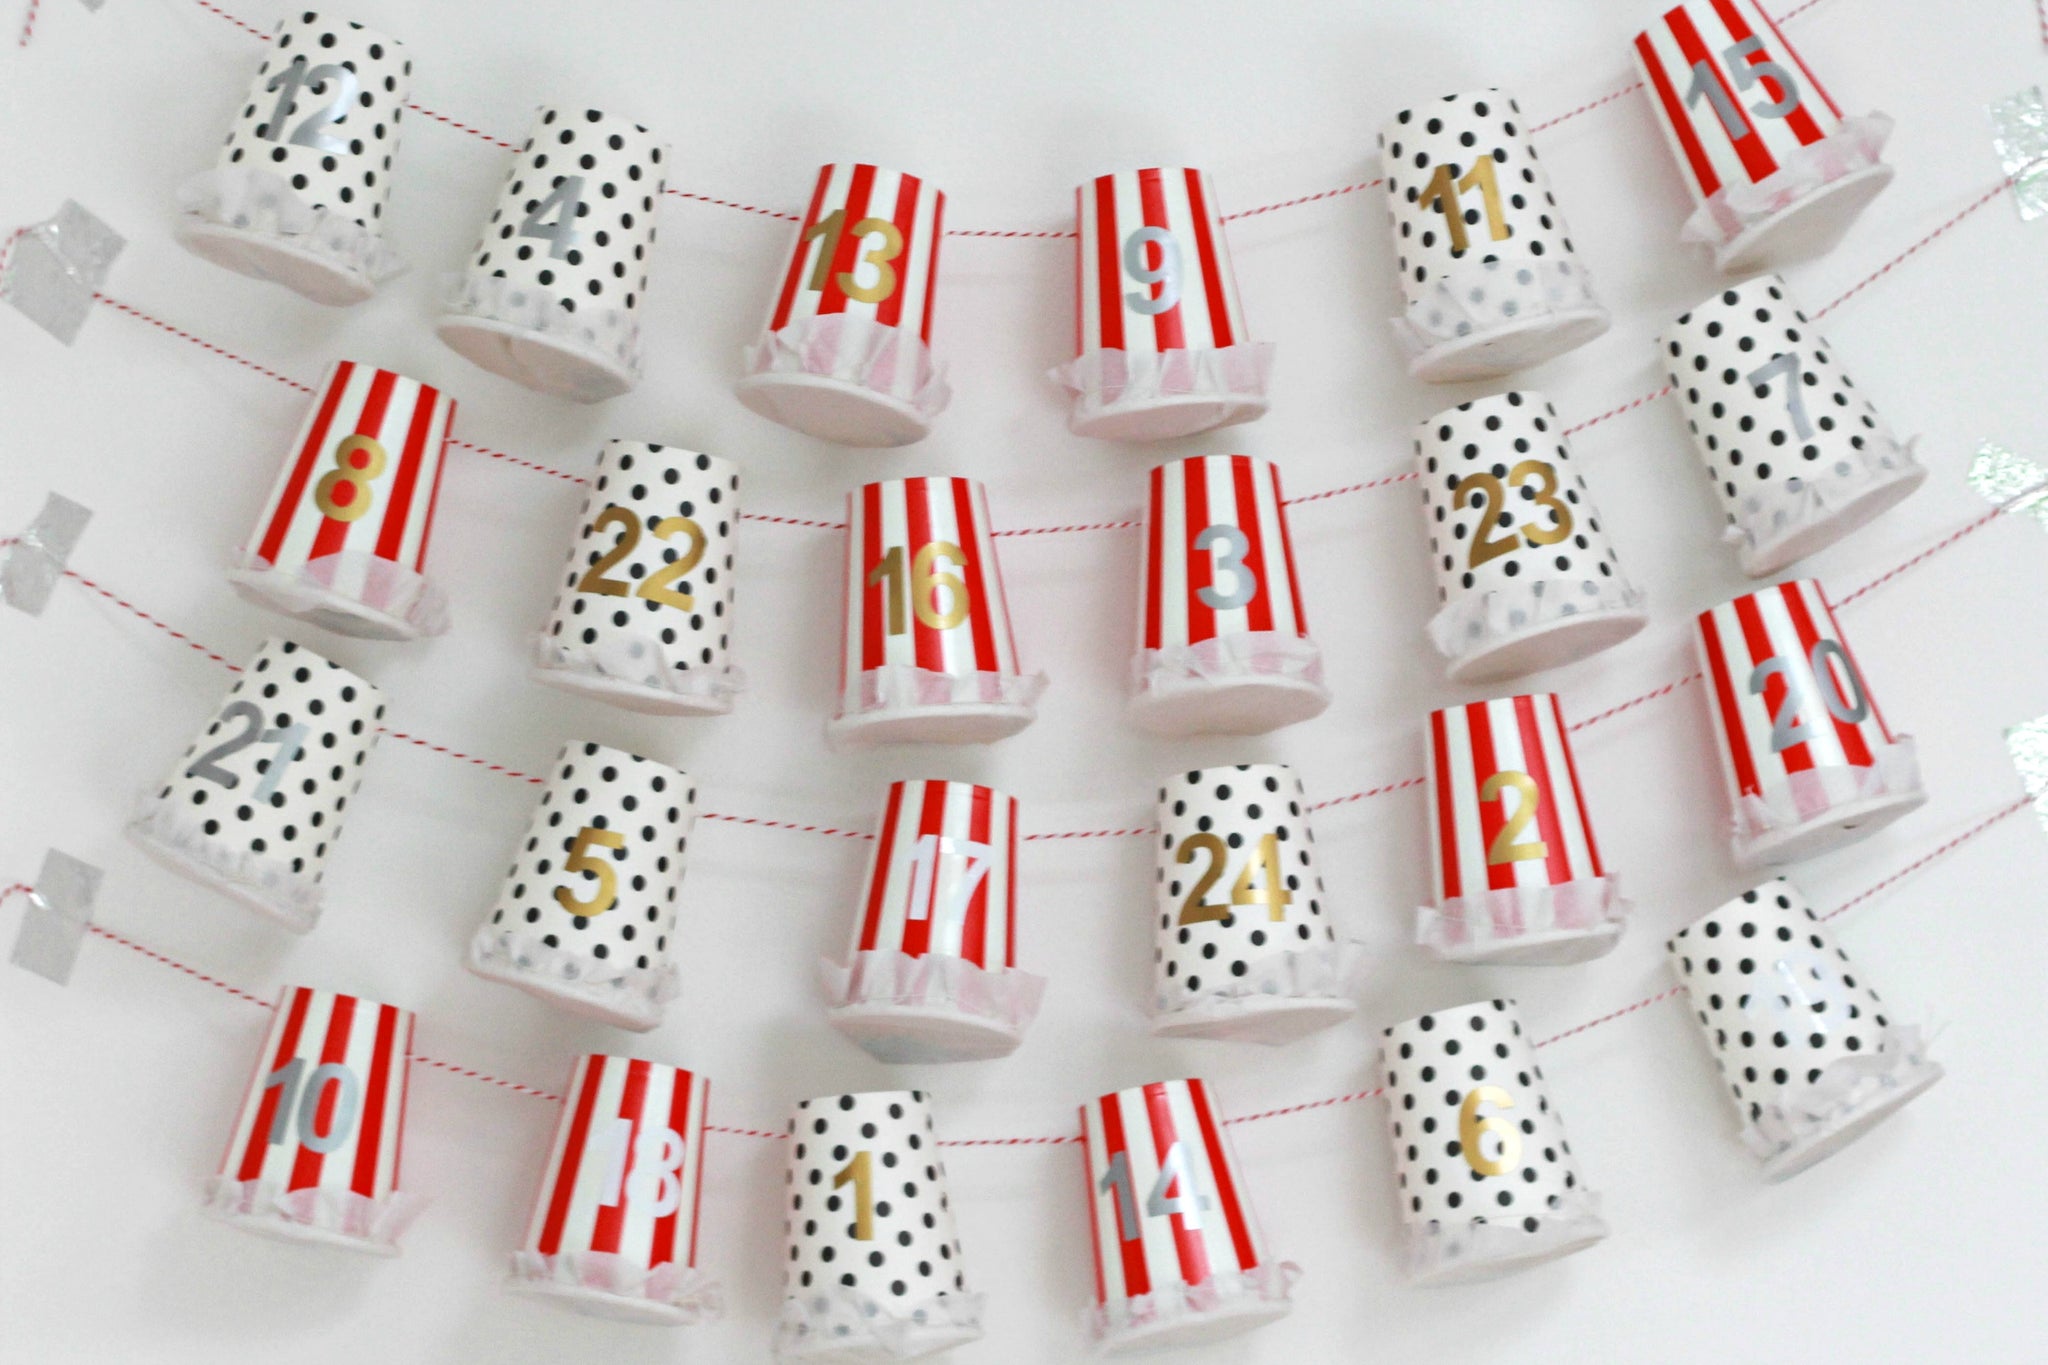 DIY Advent Calendar Tutorial with paper Cups